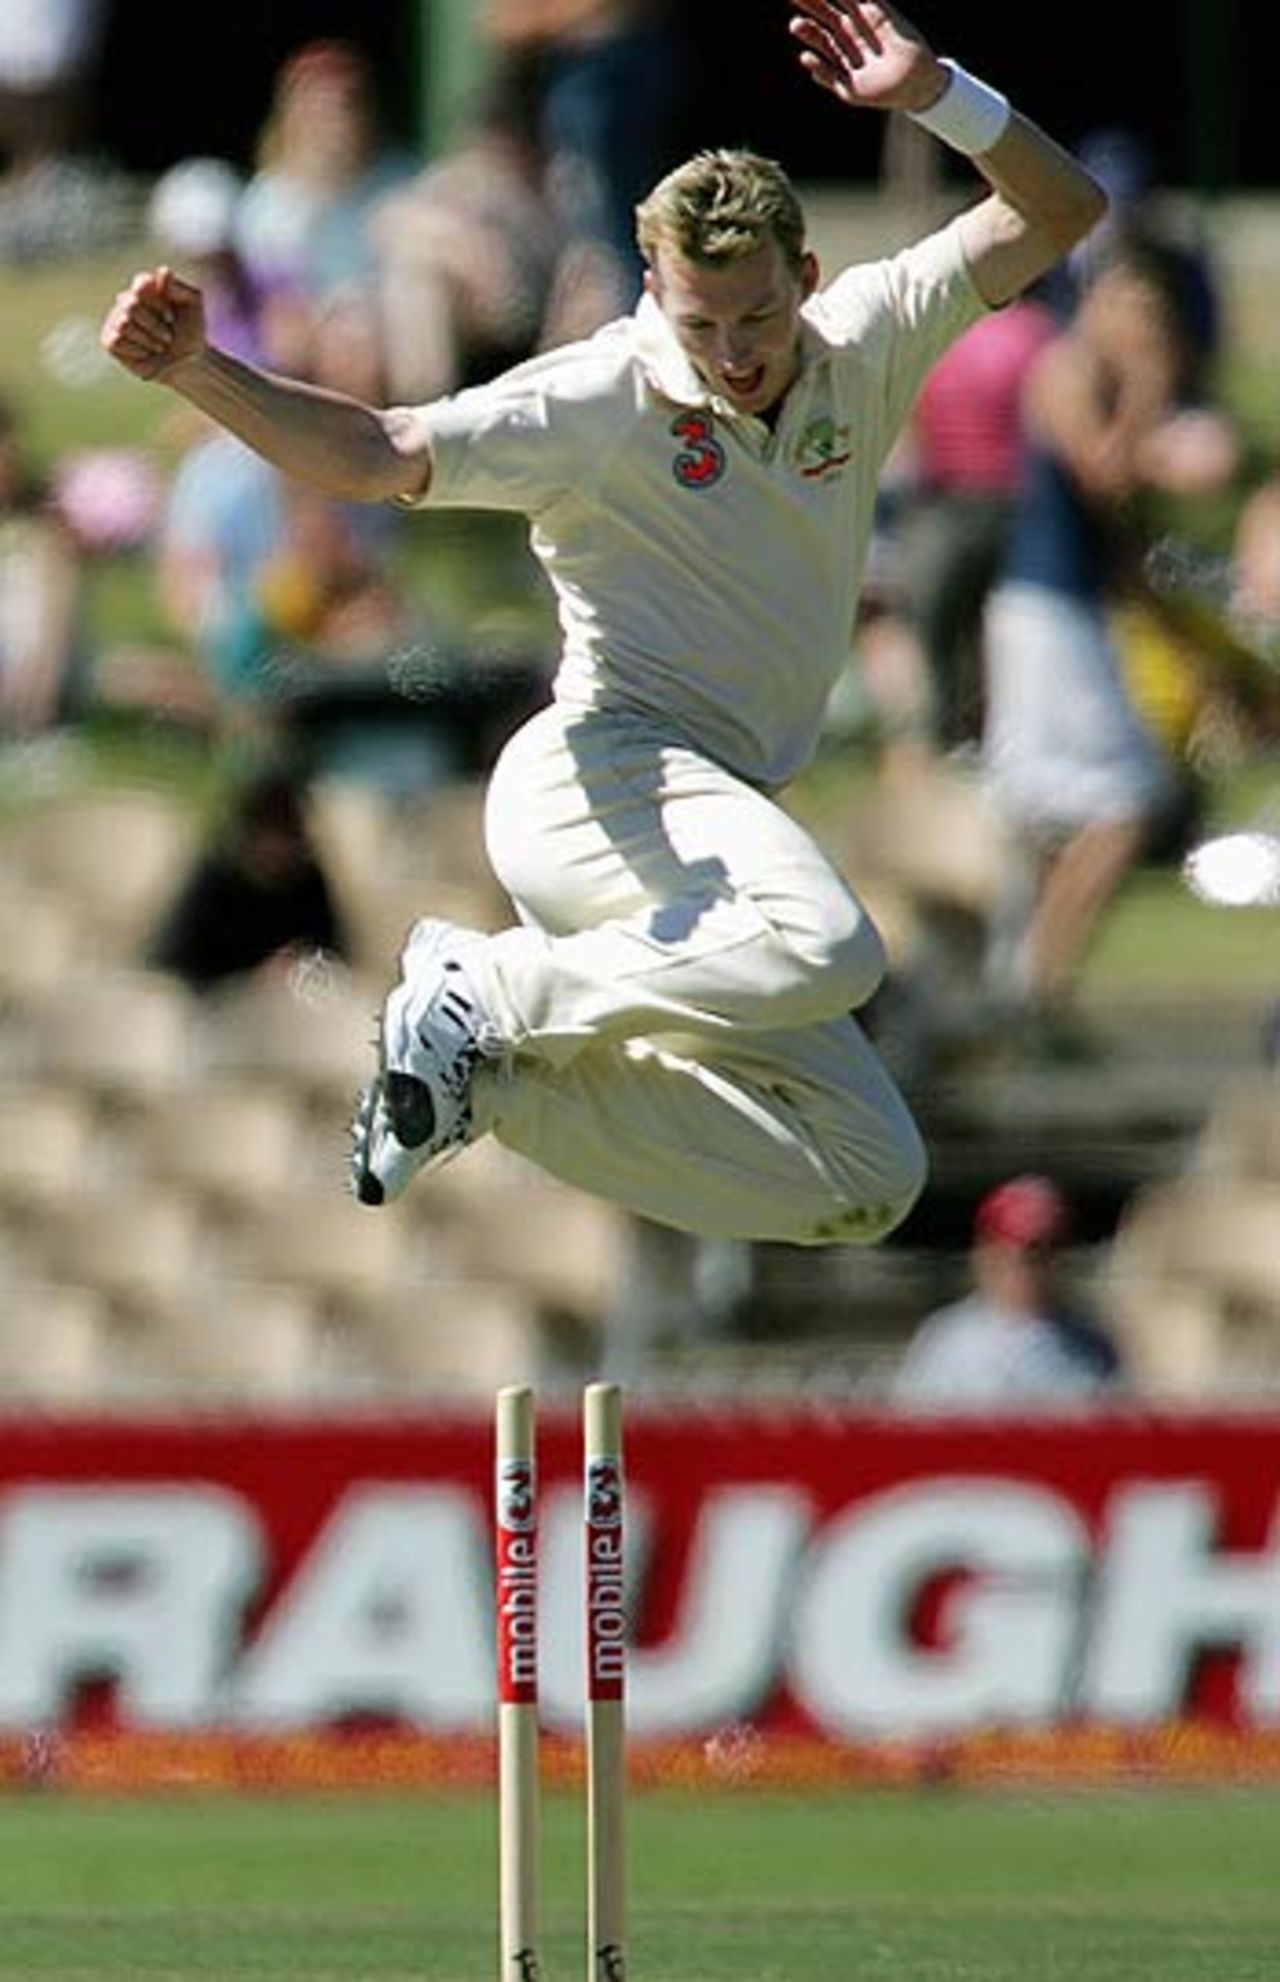 Brett Lee is delighted after dismissing Dwayne Bravo, Australia v West Indies, 3rd Test, Adelaide, 4th day, November 28, 2005